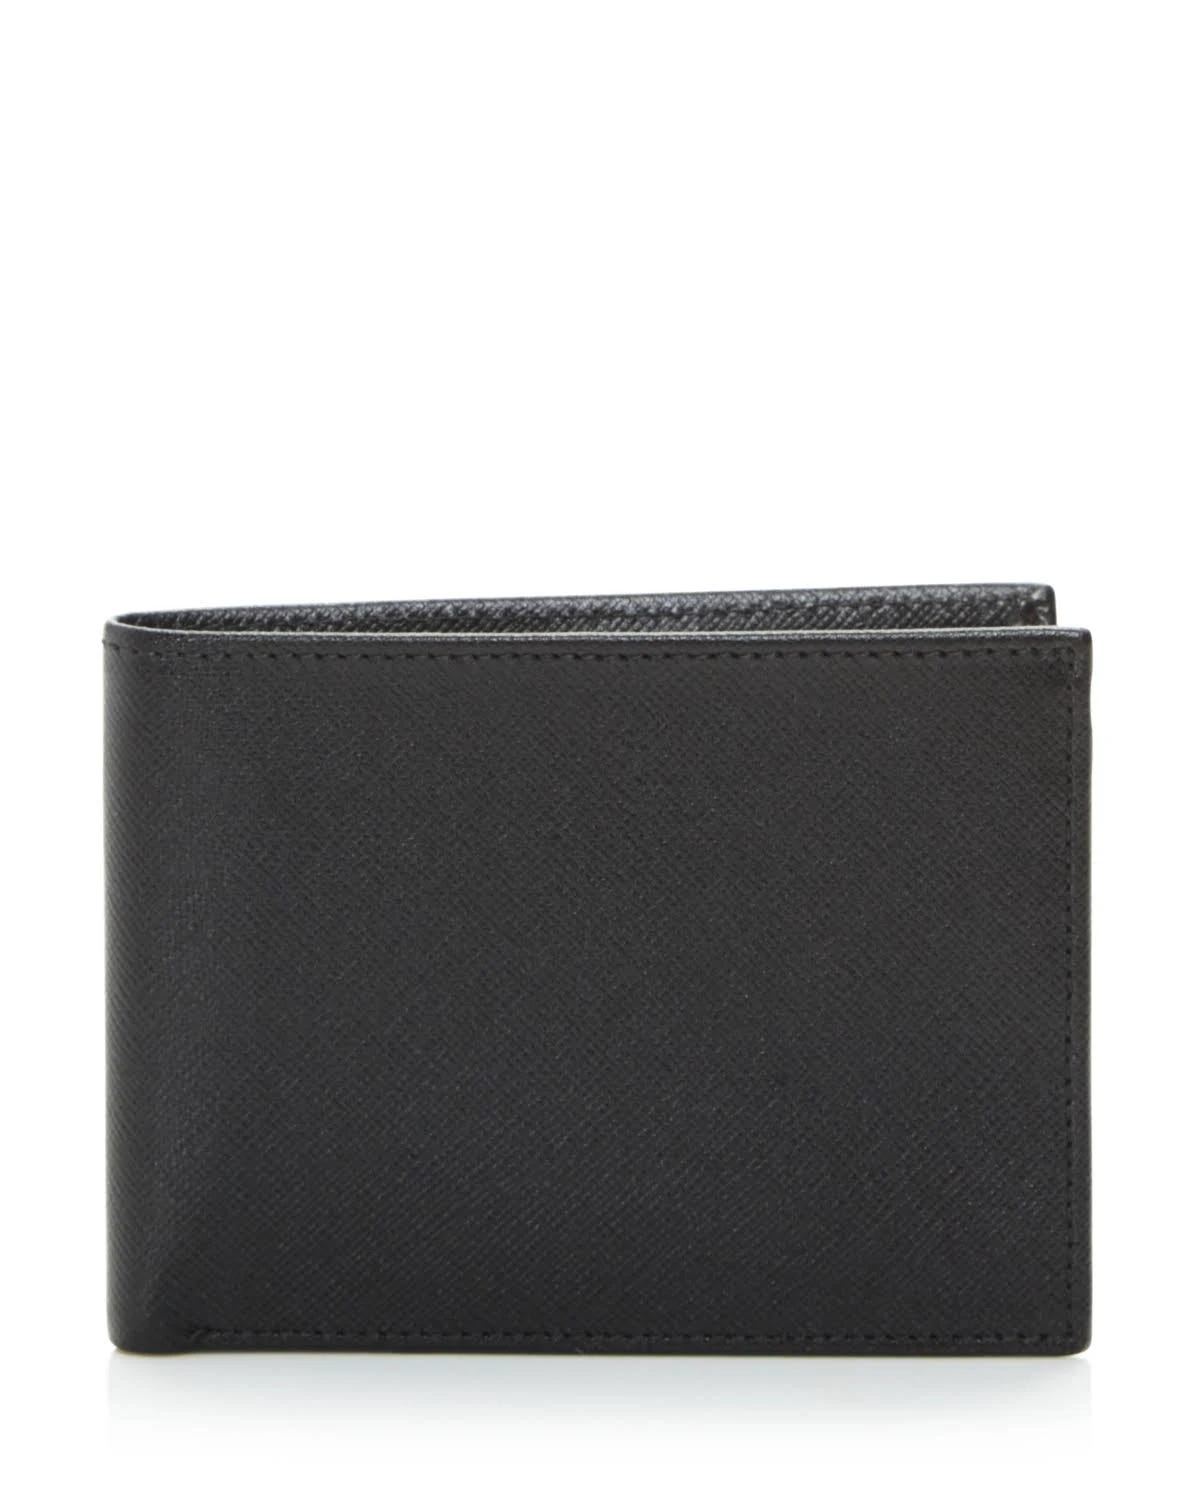 RFID Slimfold Wallet for Men by Bloomingdale's | Image